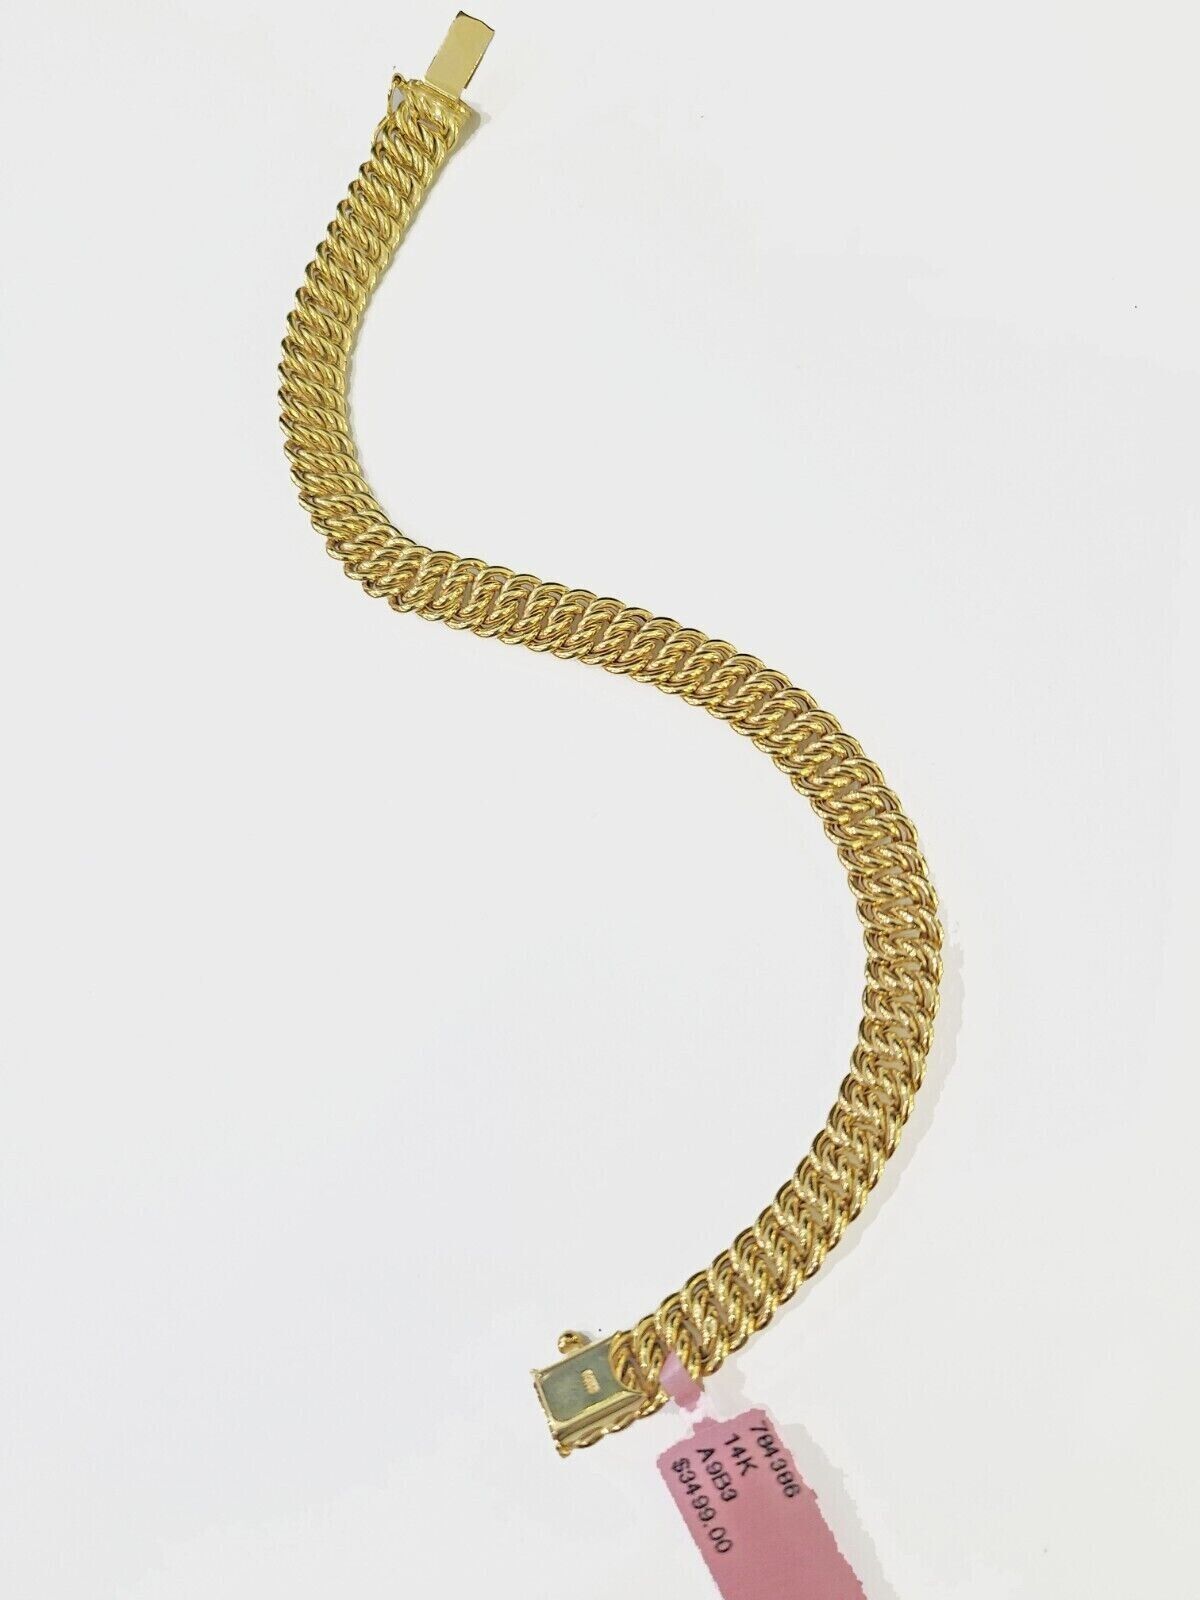 REAL 14k Gold Ladies Bracelet Flat Byzantine Link 9mm Women 7.5 Inch 14kT Unique